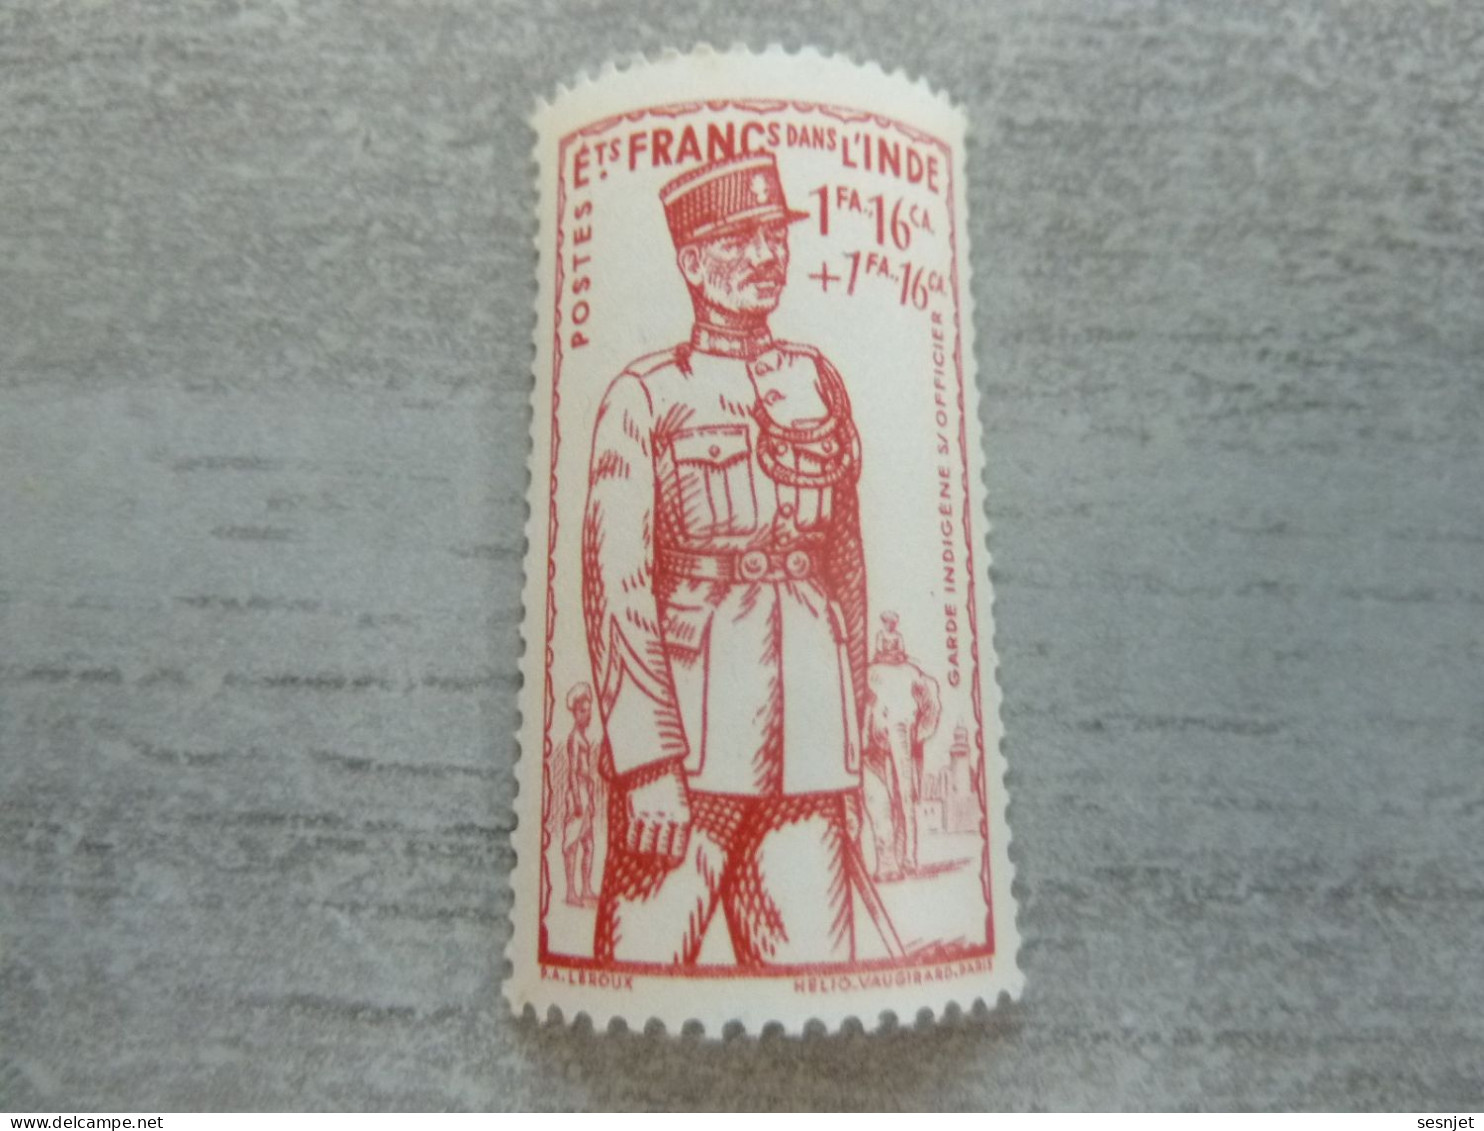 Défense Empire - Sous-Officier Garde Indigène - 1fa. 16ca+1fa.16ca - Yt 123 - Rouge - Neuf - Année 1941 - - Unused Stamps